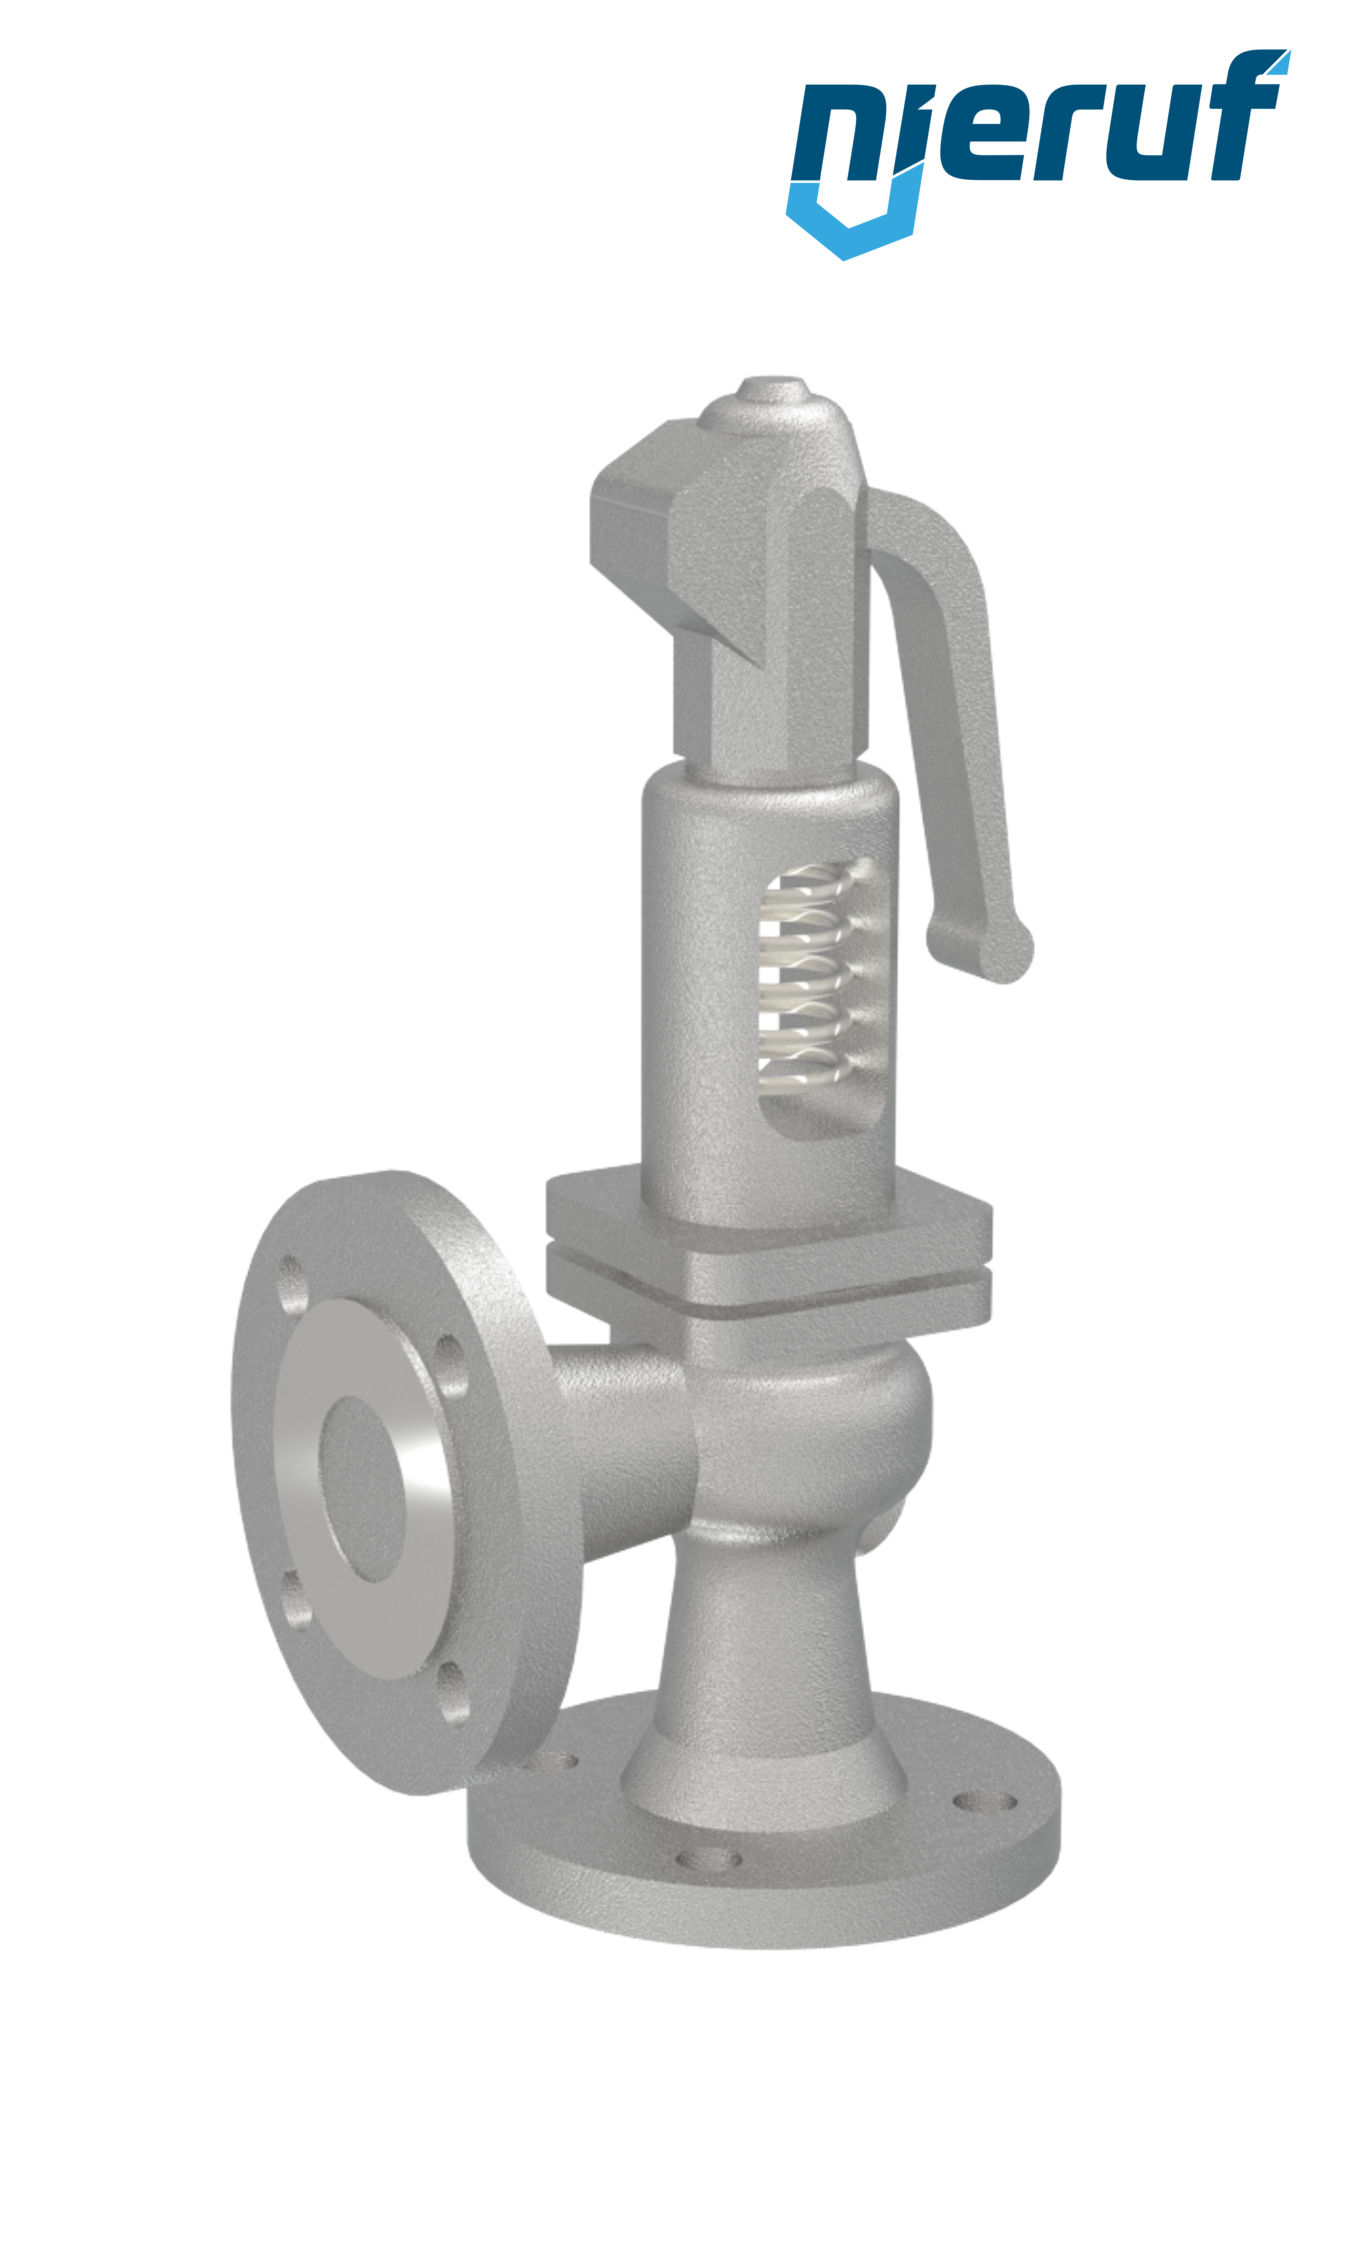 flange-safety valve DN40/DN40 SF0102, cast iron EN-JL1040 FPM, with lever